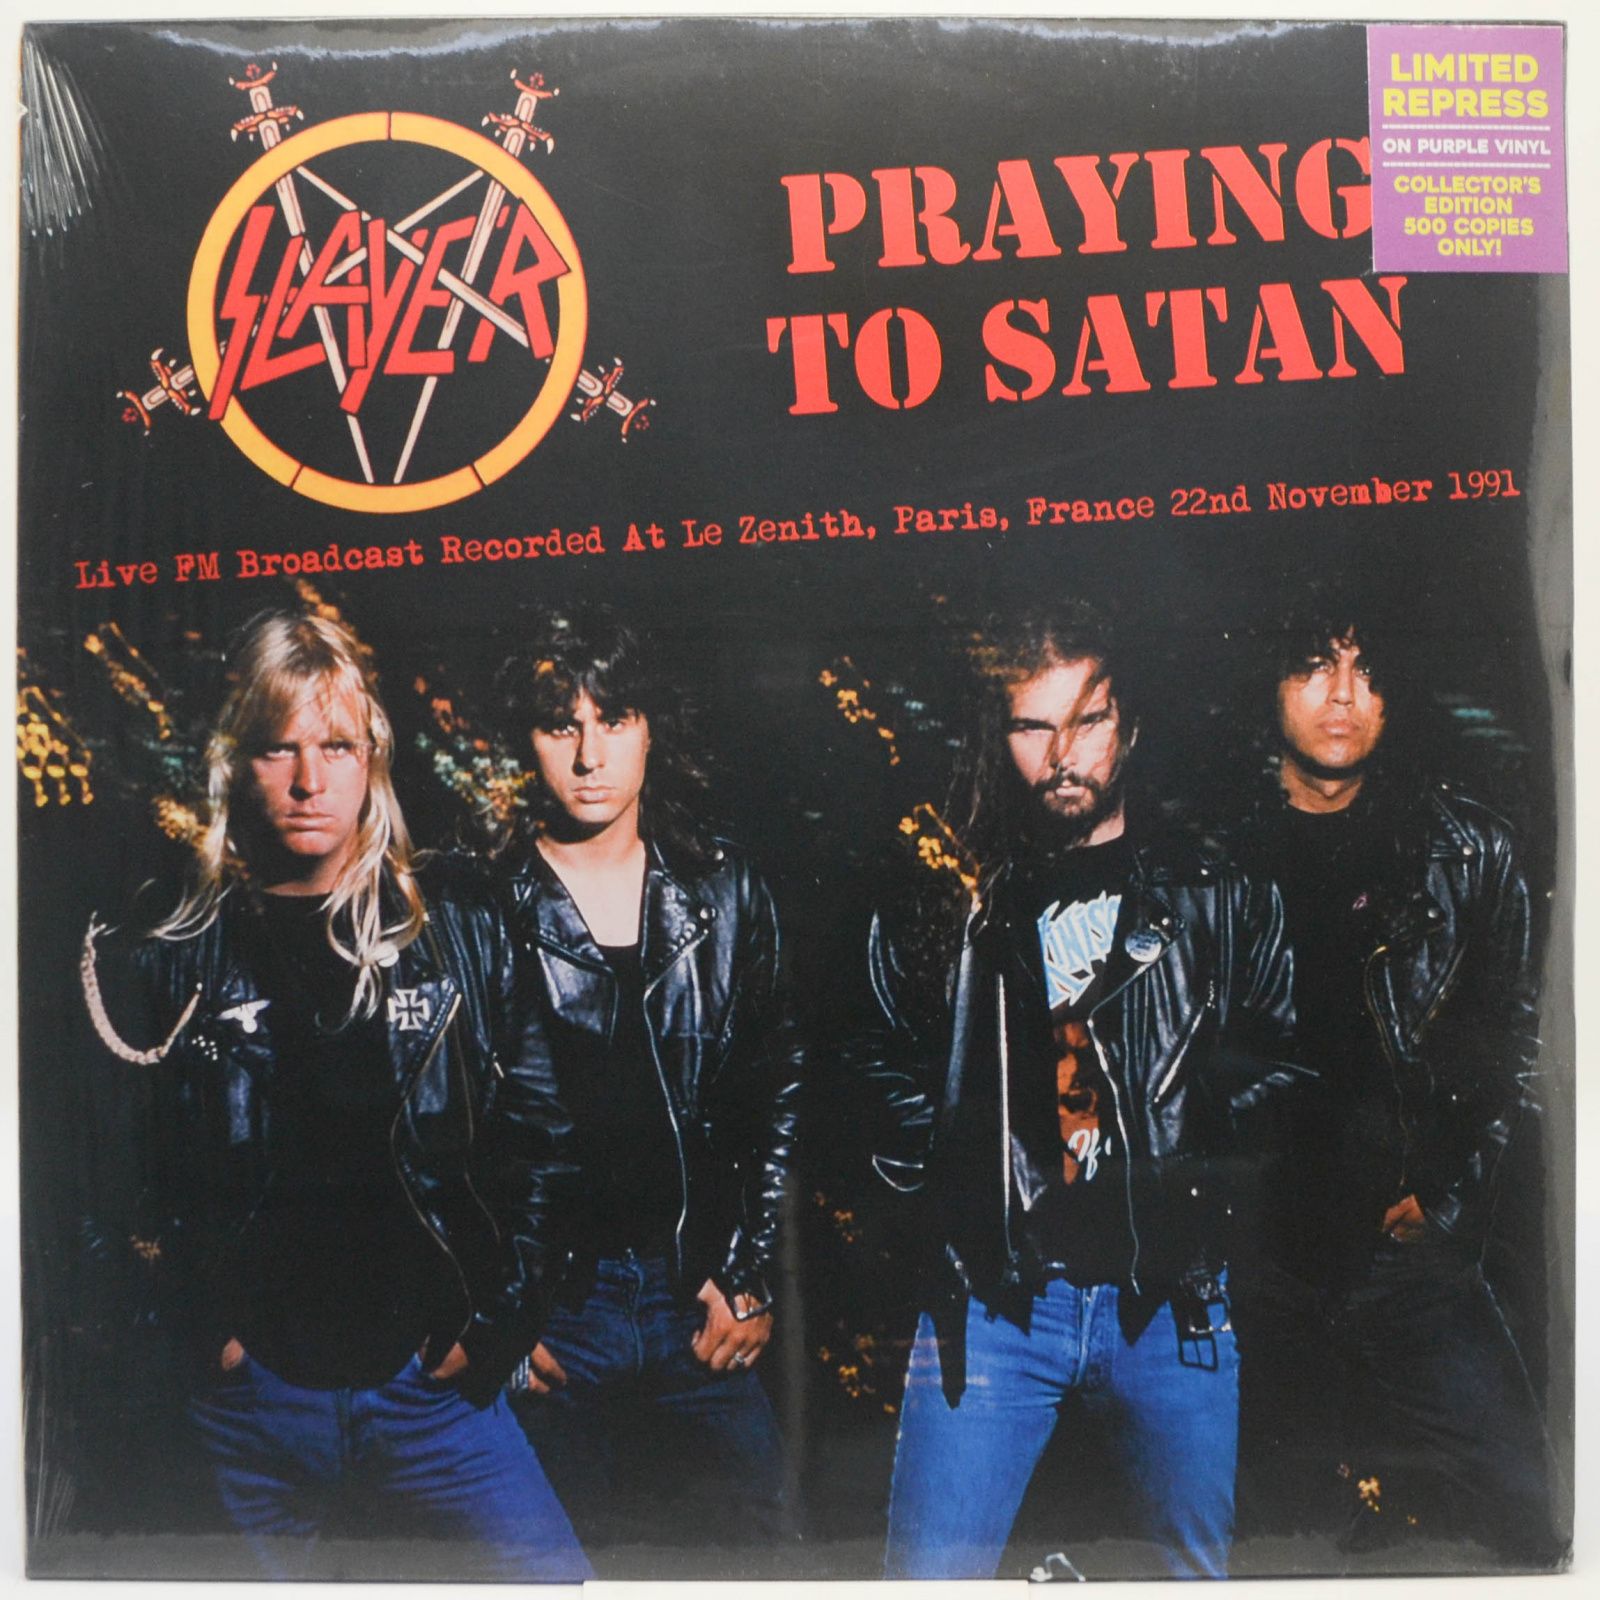 Slayer — Praying To Satan: Live FM Broadcast Recorded At Le Zenith, Paris, France 22nd November 1991, 2018